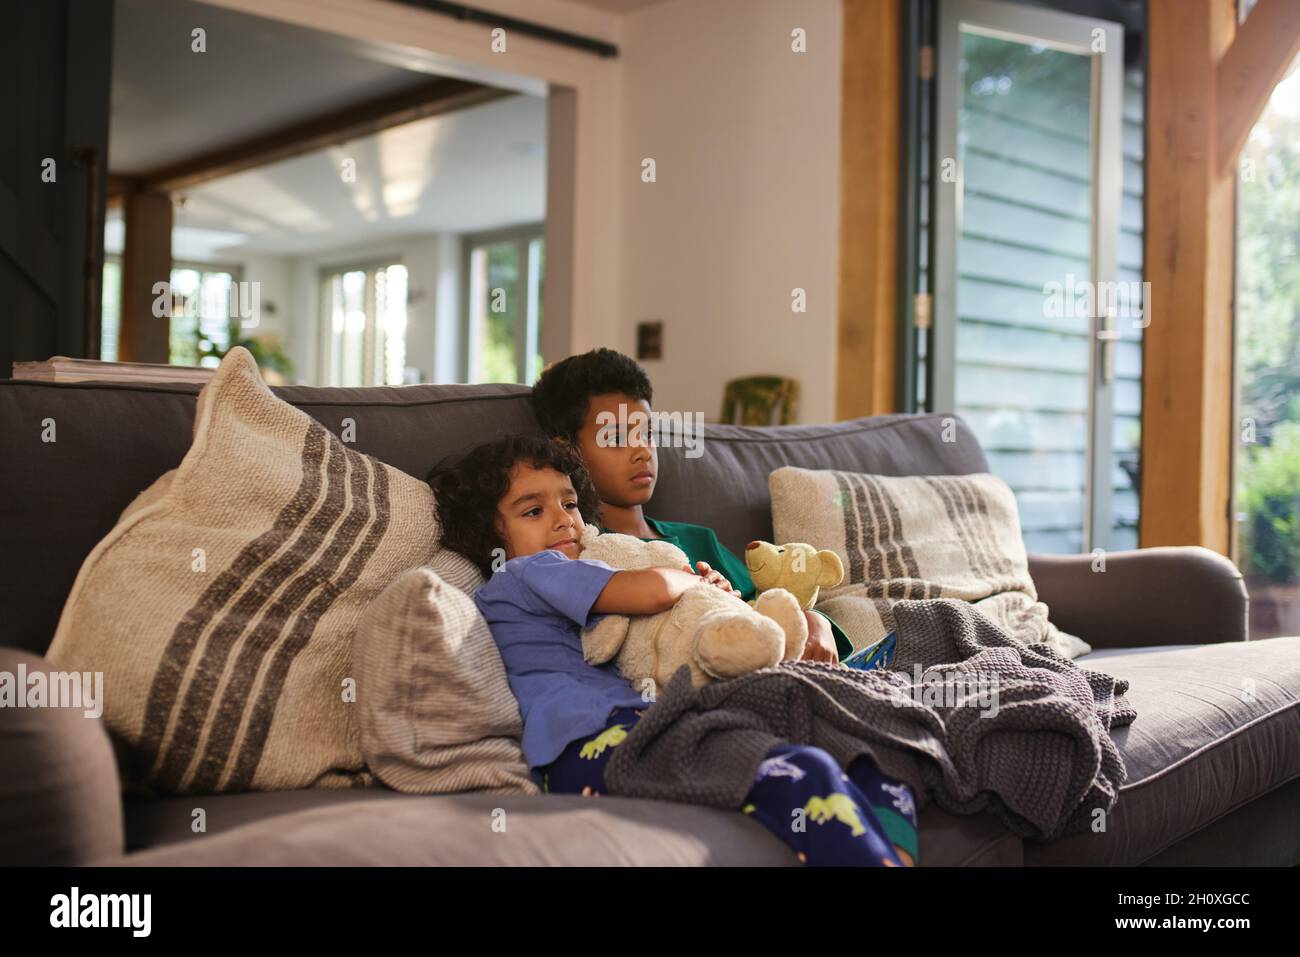 Two boys watching TV on sofa Stock Photo